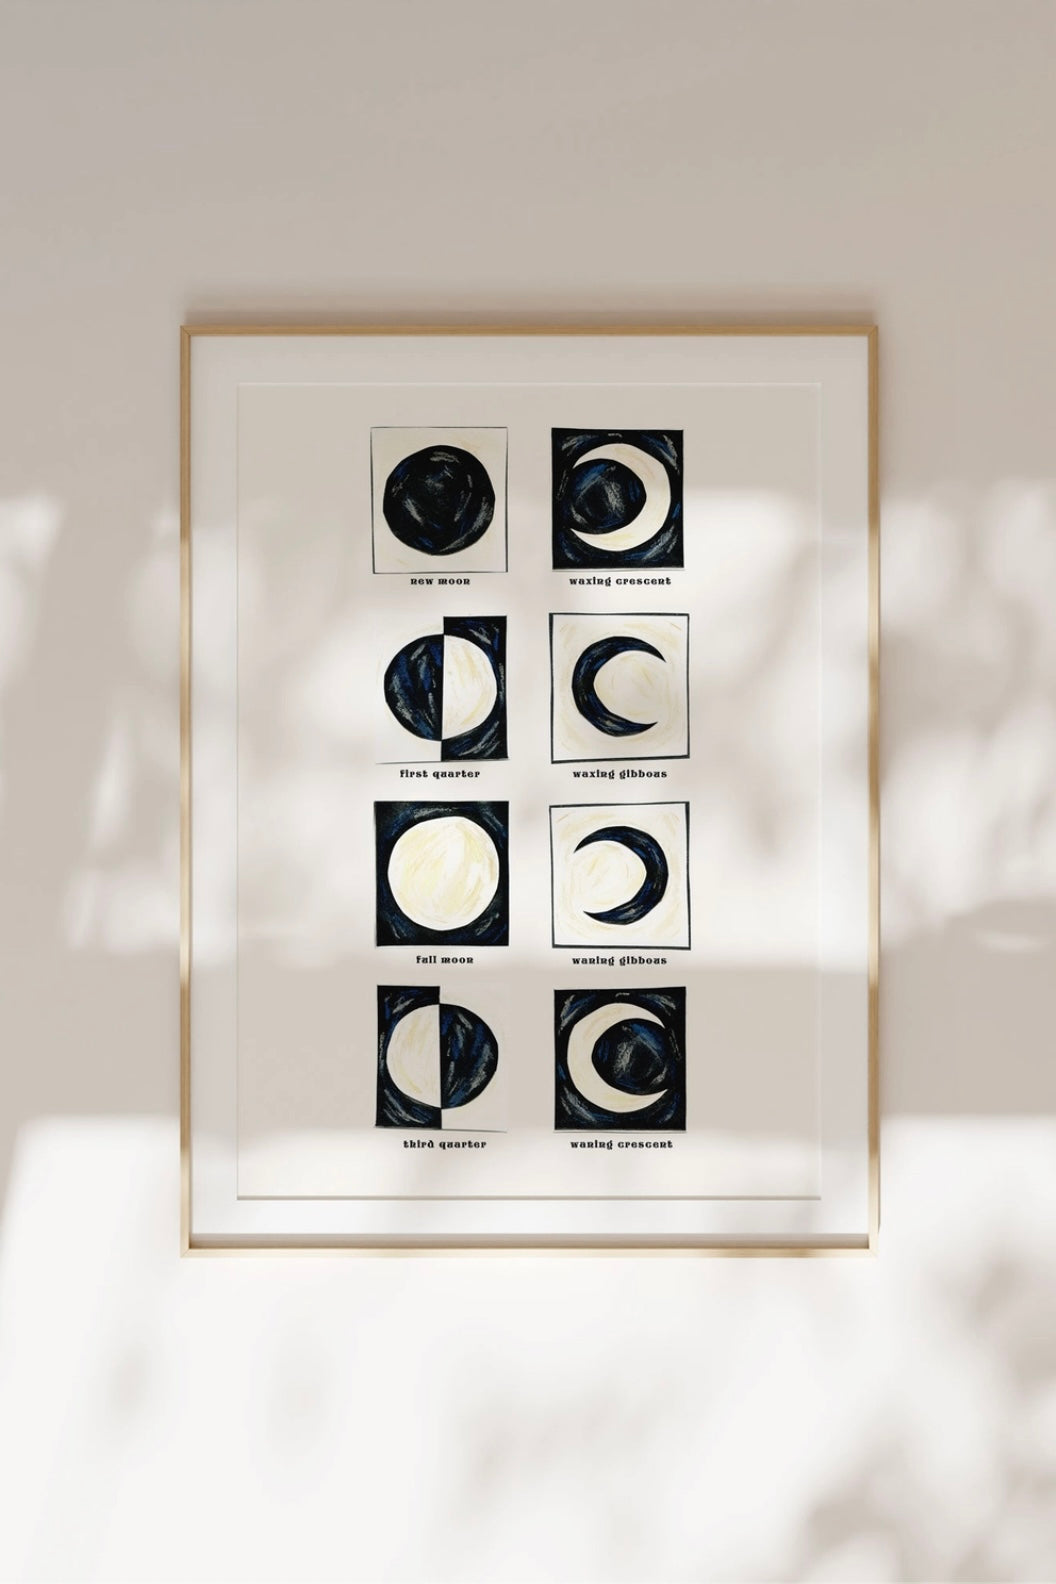 Framed Moon Prints, Paintings & Posters